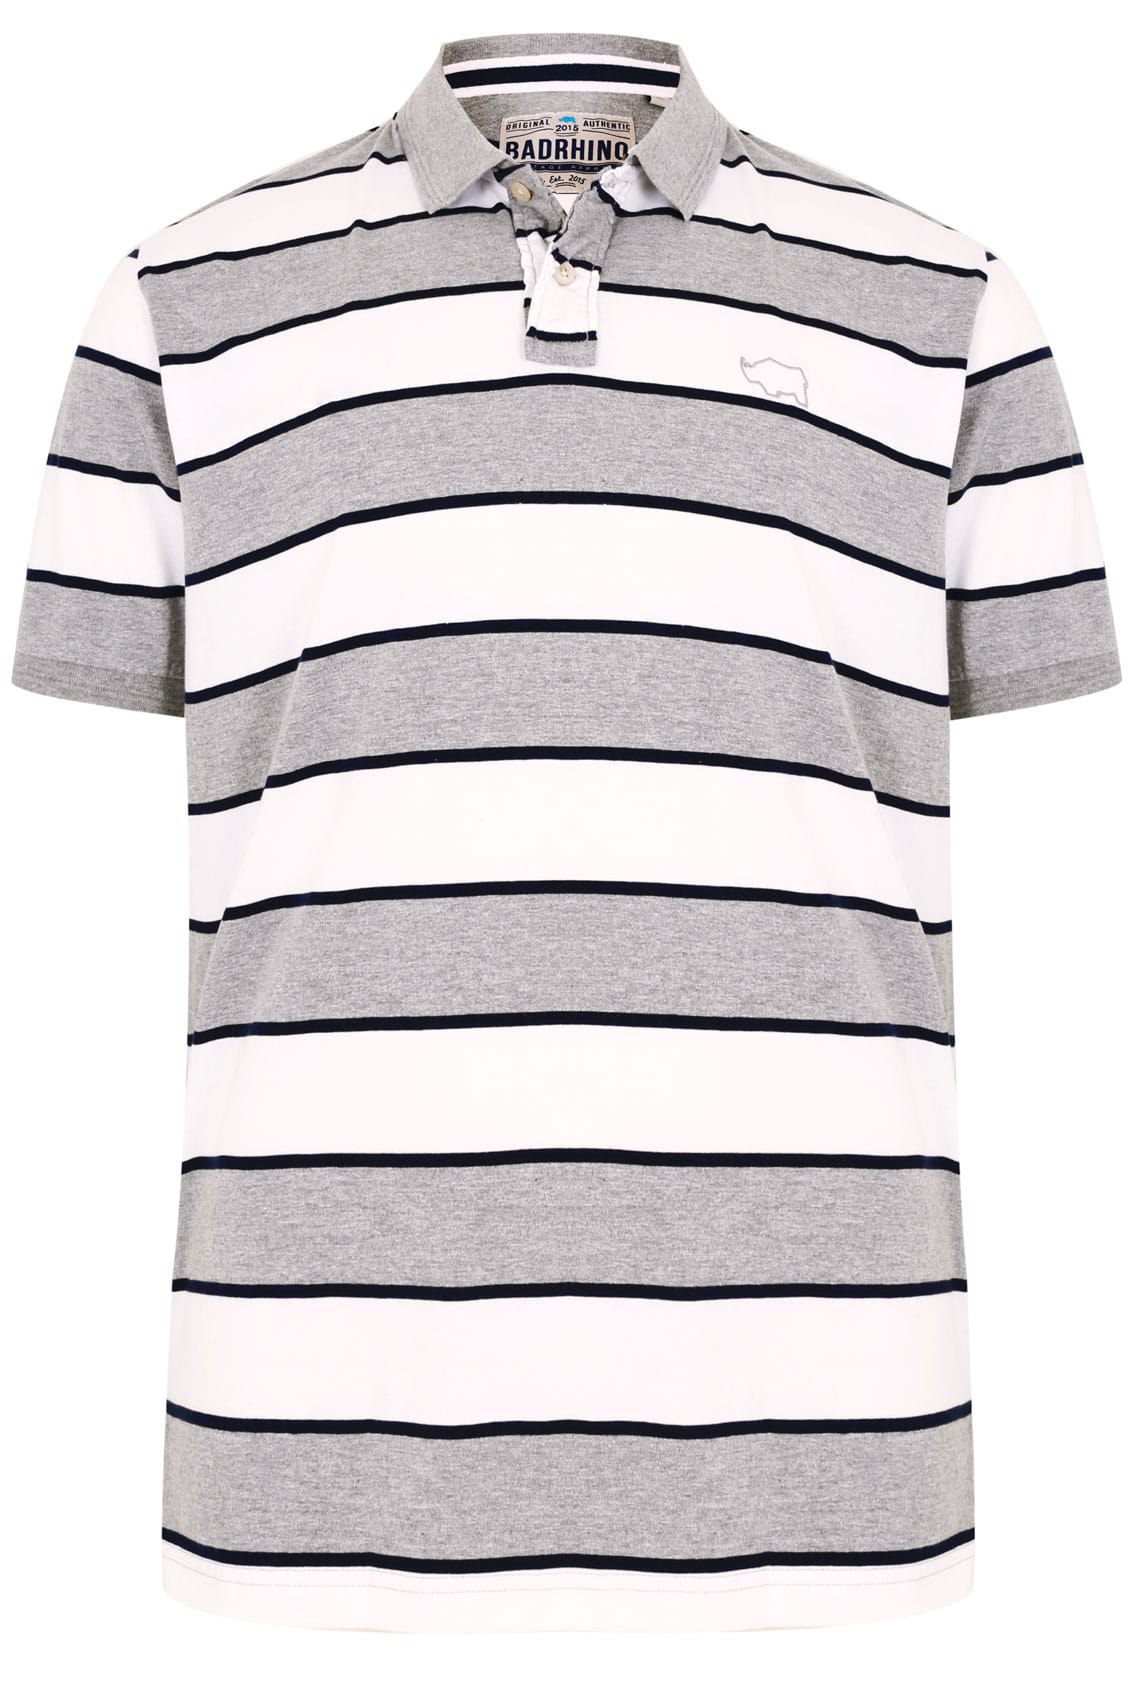 BadRhino Grey Marl & White Stripe Polo Shirt, Size L to 8XL